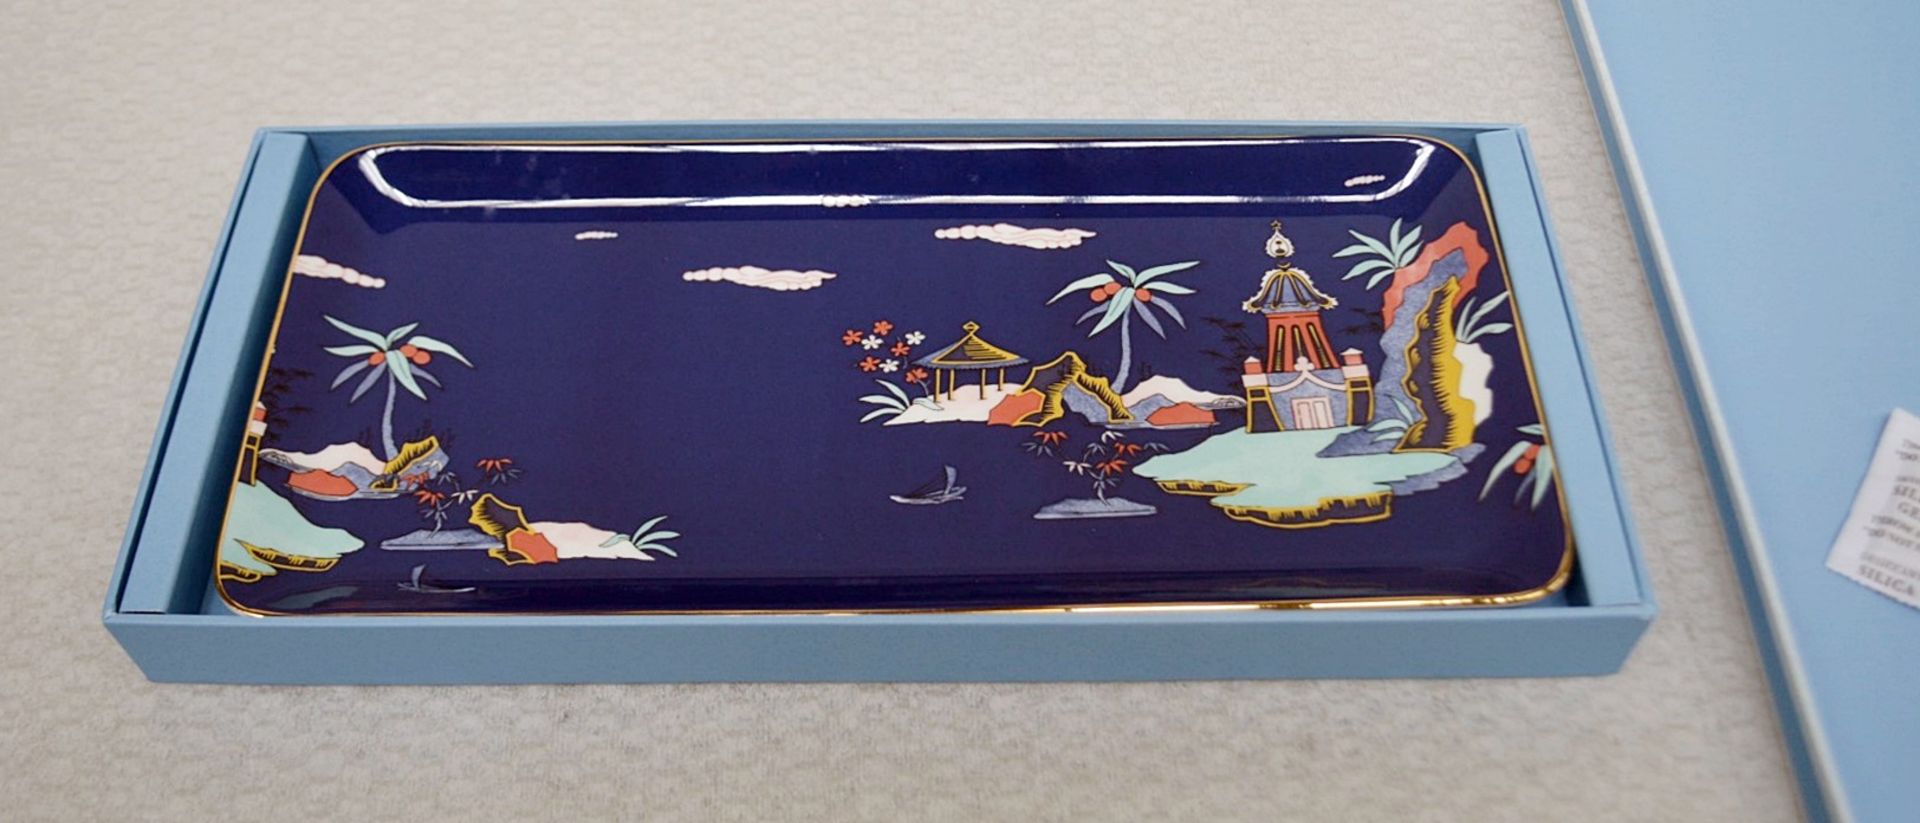 1 x WEDGWOOD 'Wonderlust' Blue Pagoda Sandwich Tray In It's Original Box - Original RRP £85.00 - Image 2 of 8